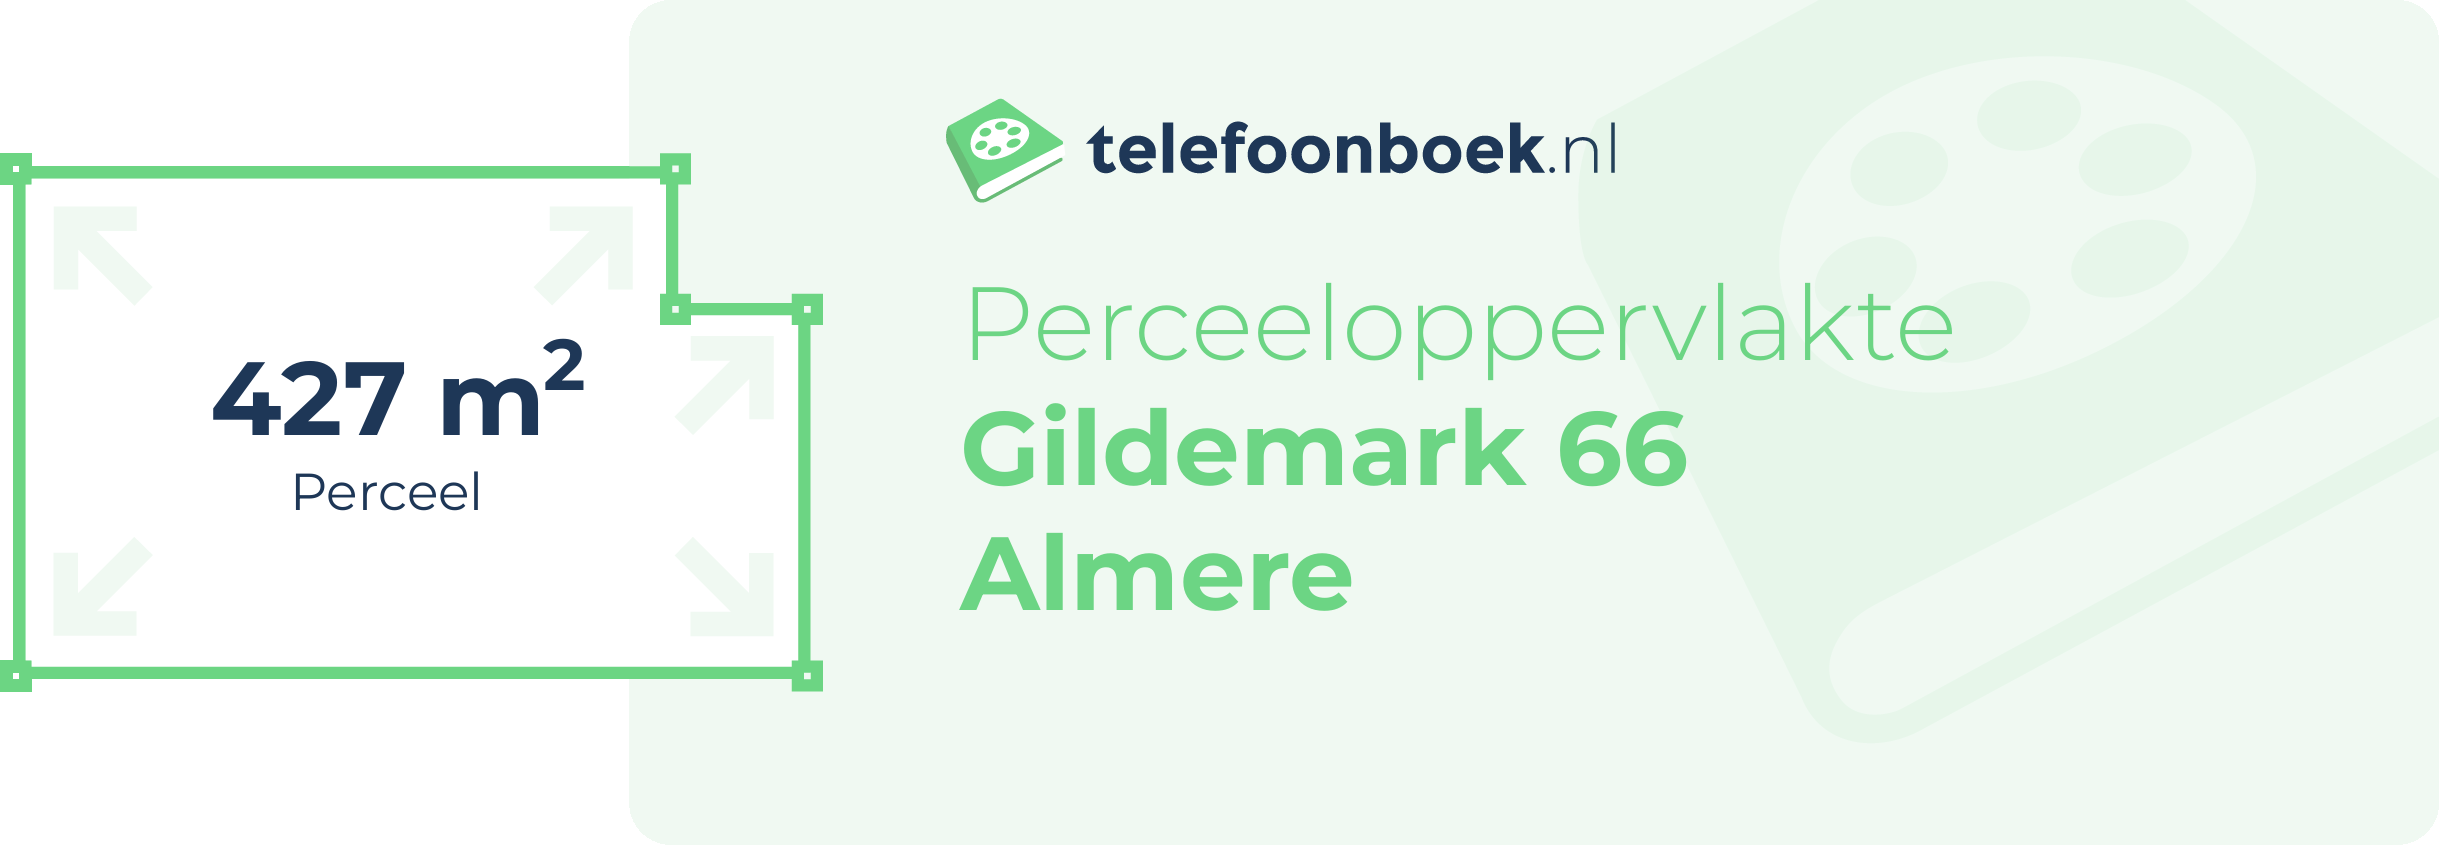 Perceeloppervlakte Gildemark 66 Almere